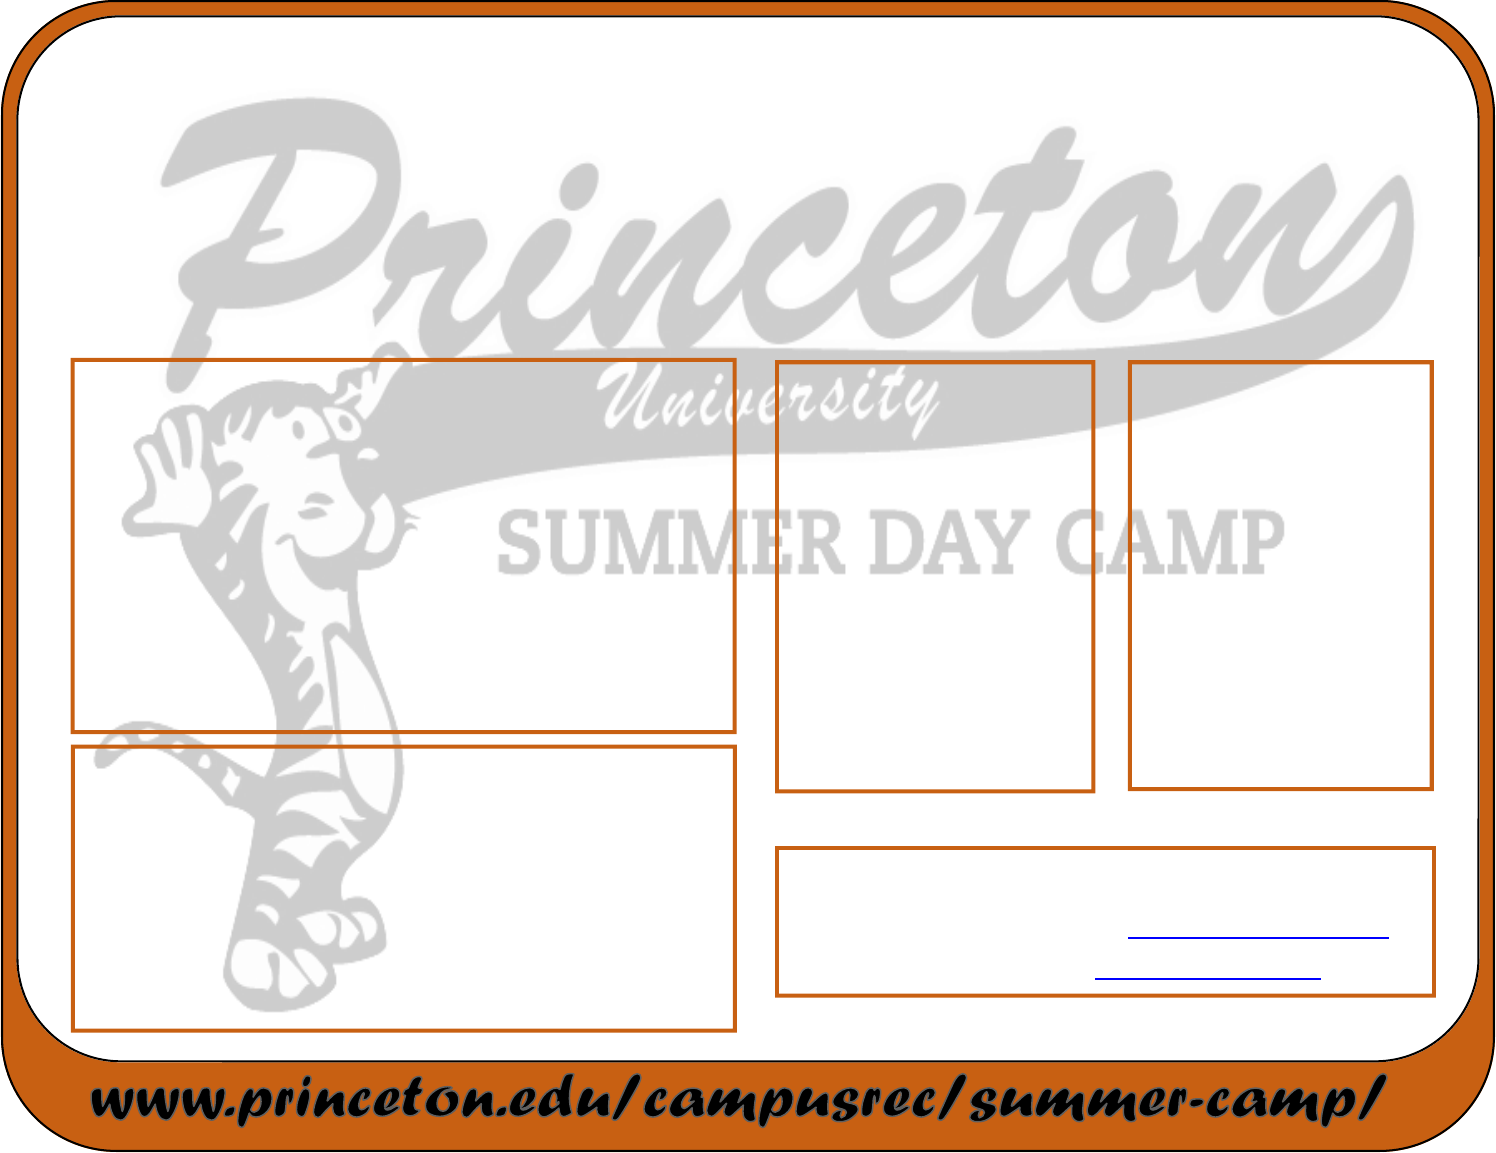 2014 Summer Camp Brochure